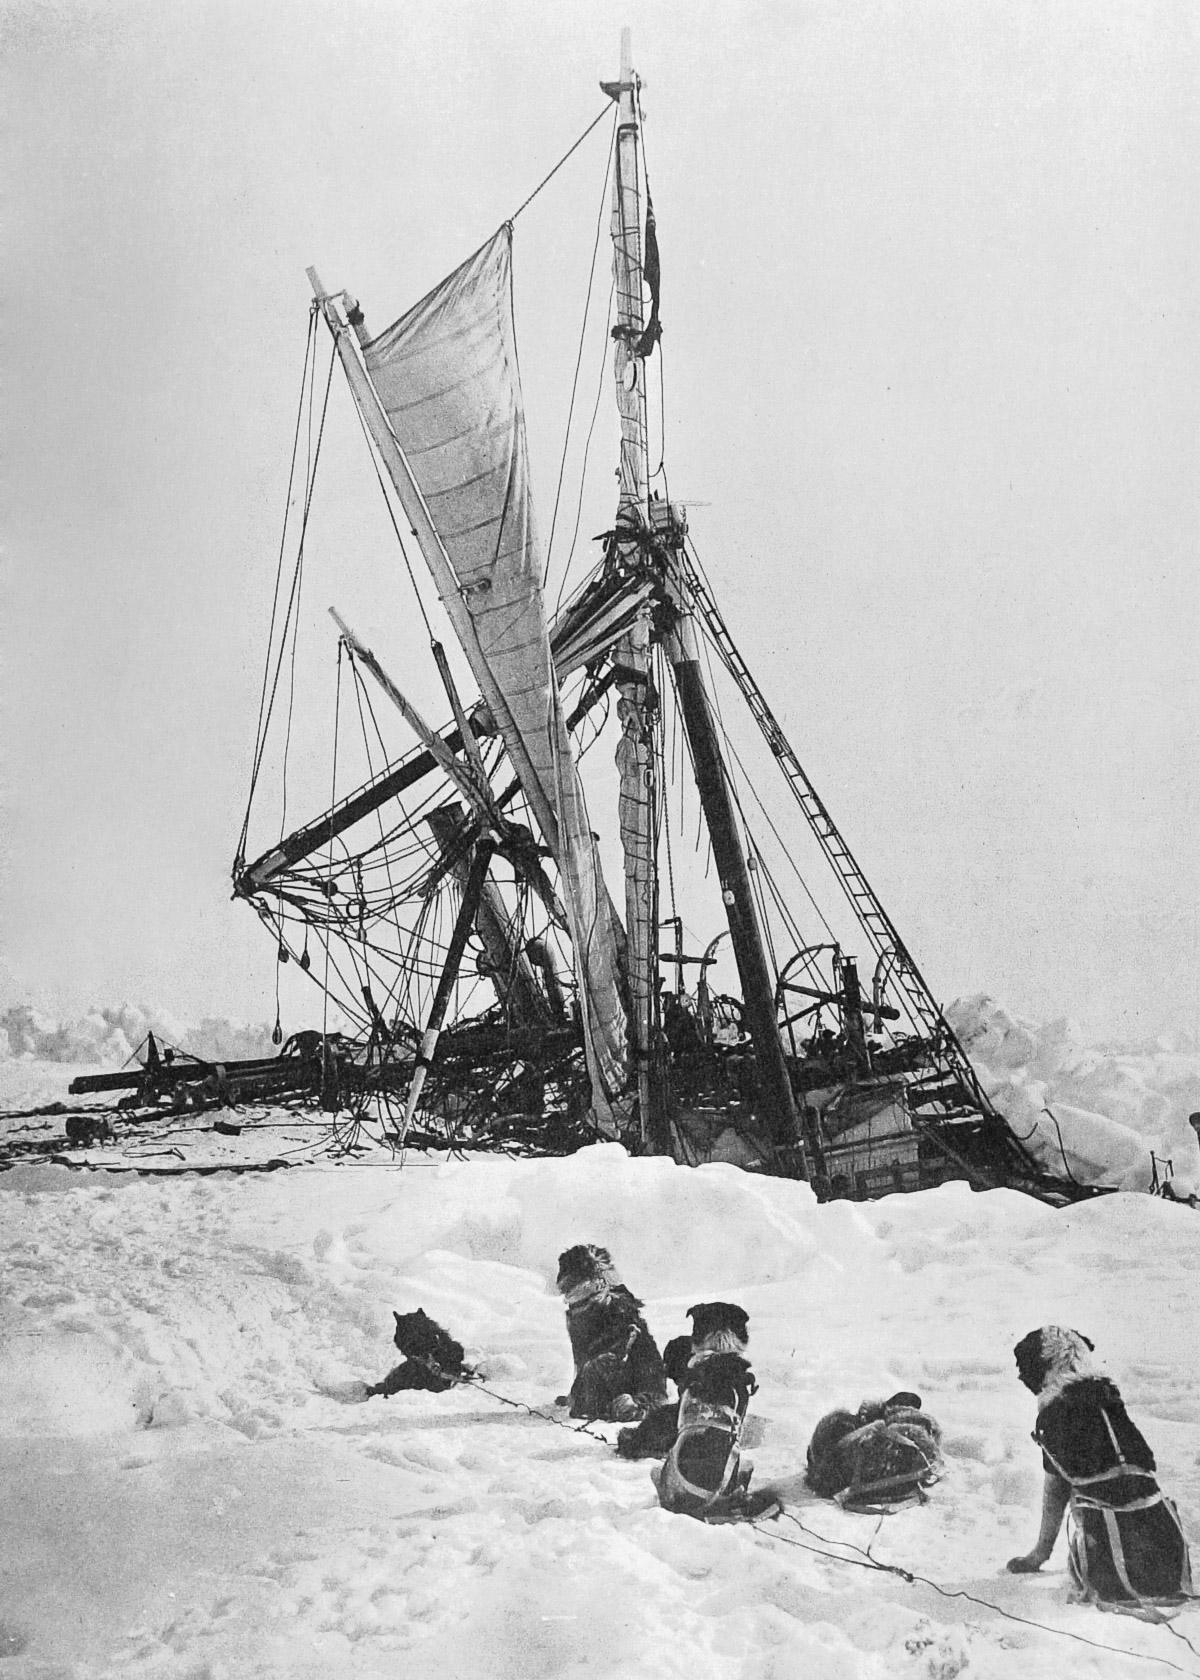 The Endurance: Shackleton's legendary lost ship discovered! 4